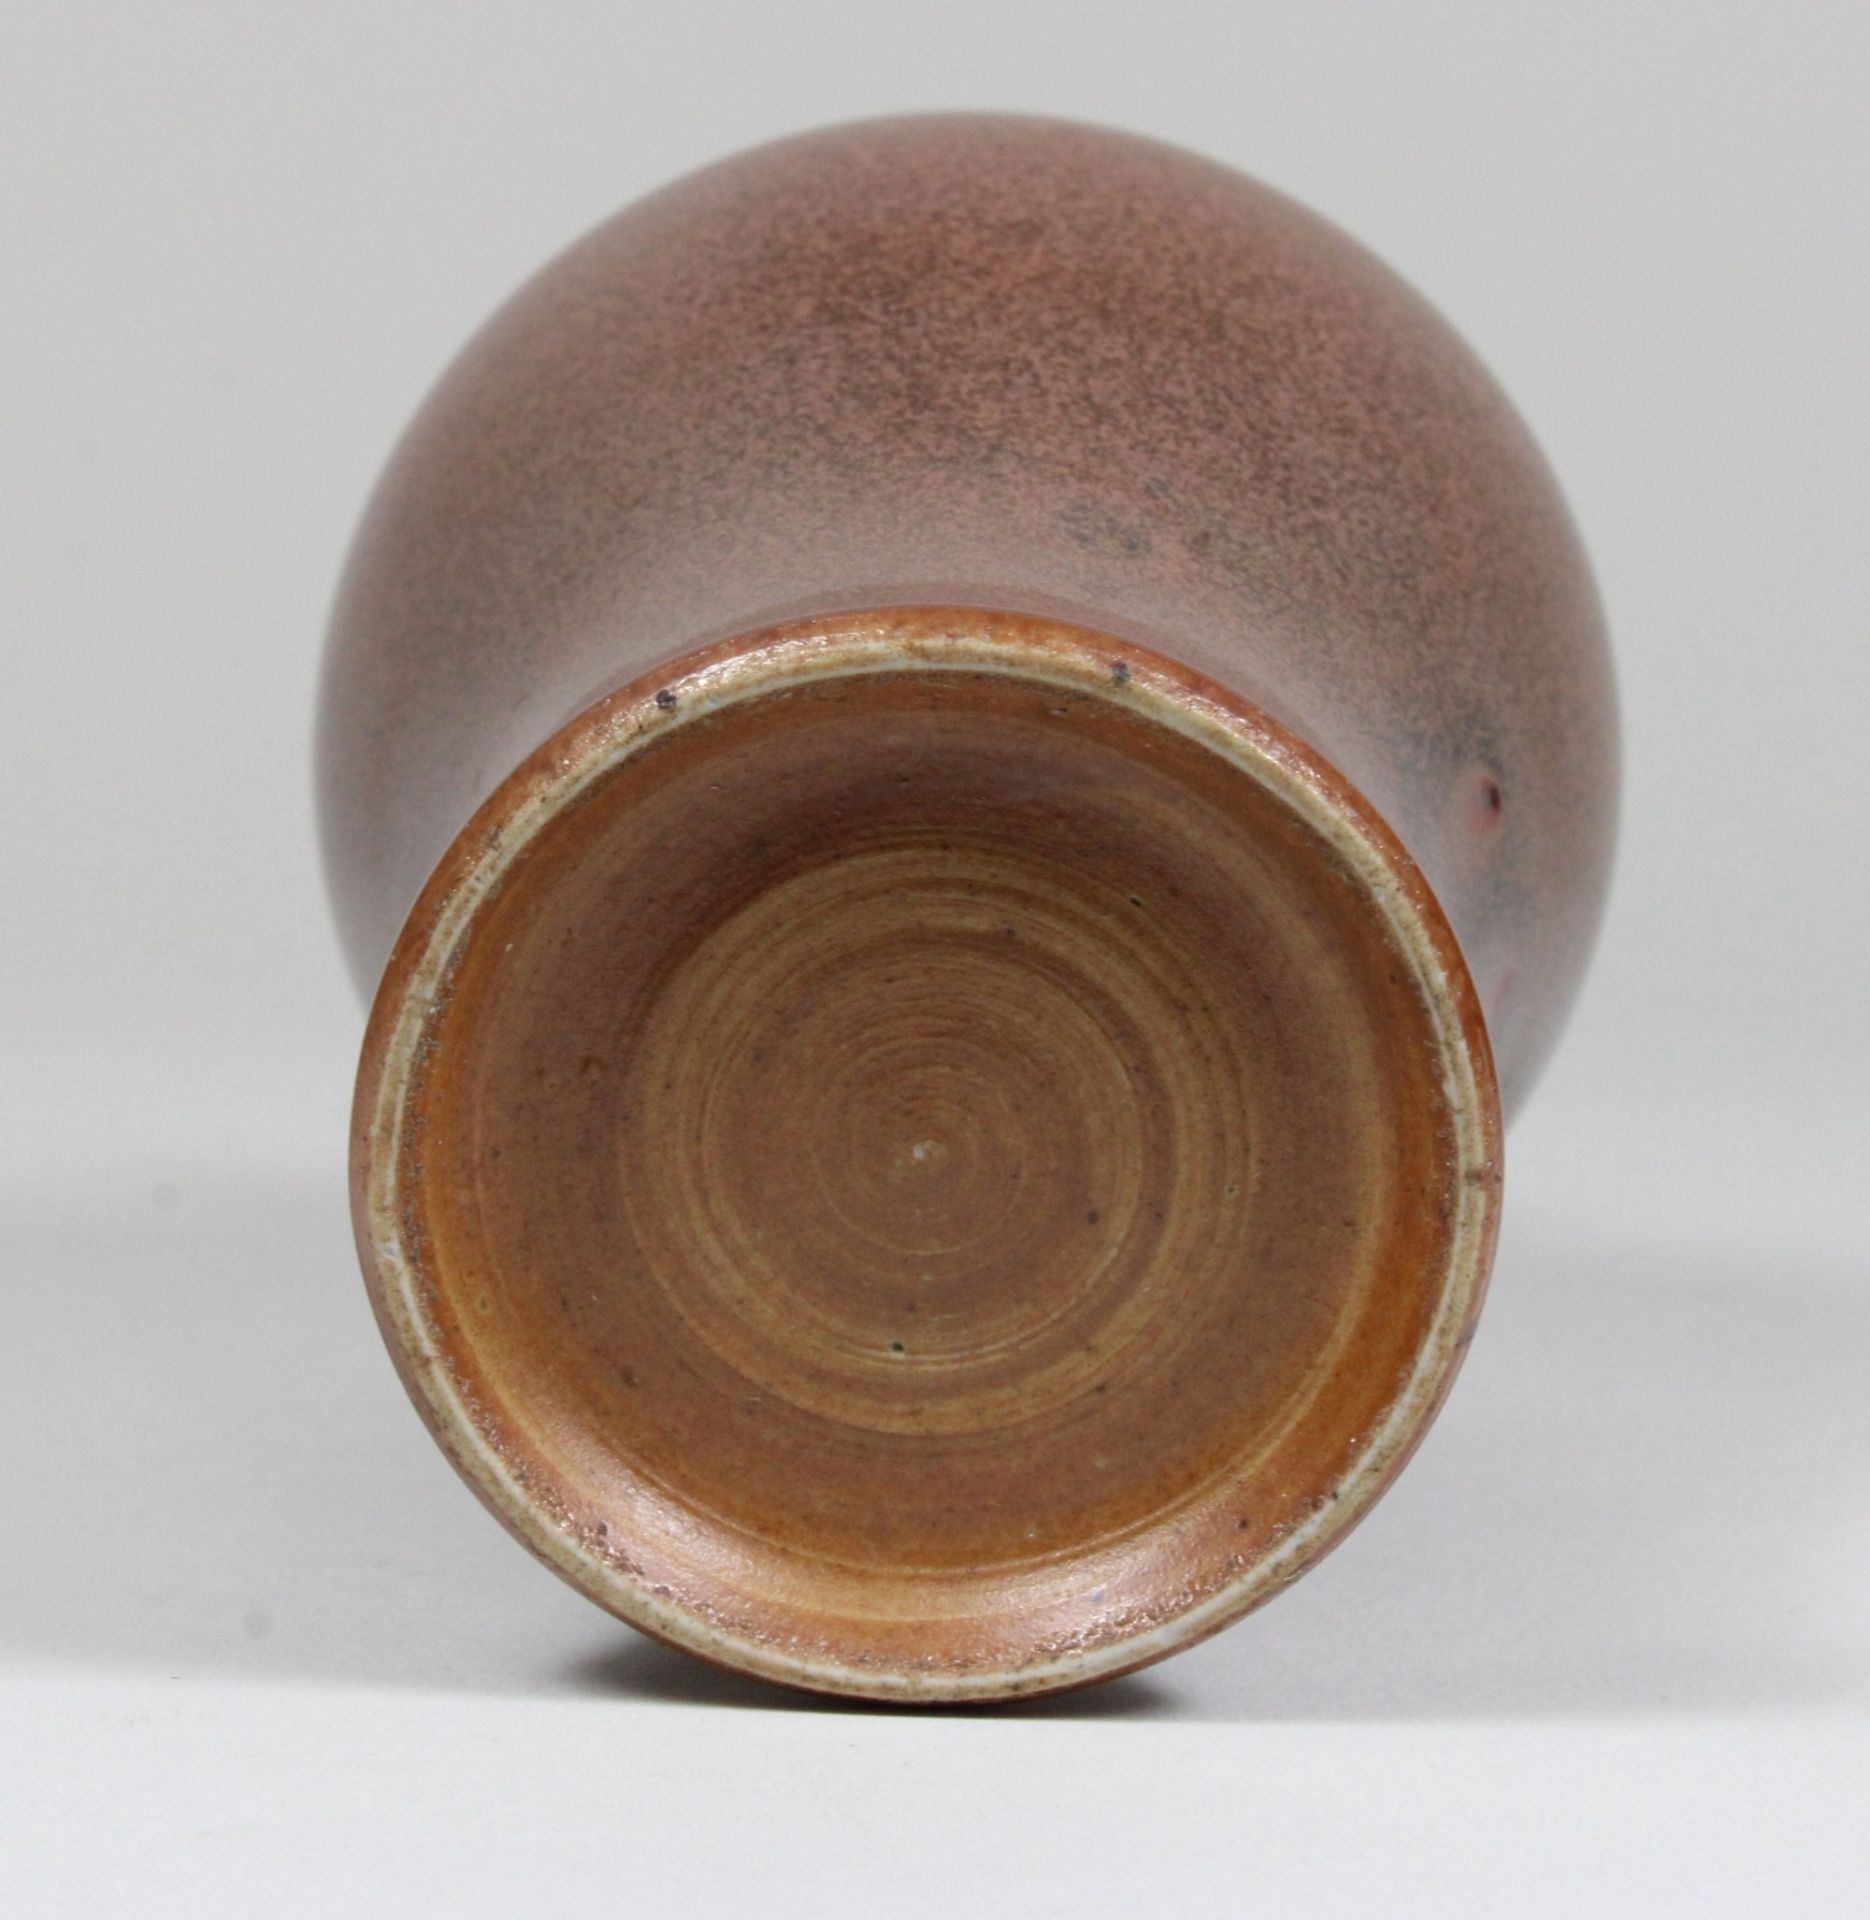 Meiping Vase, China, Porzellan, wohl 19/20. Jh., Eisenrost-Glasur. H.: 14 cm. Guter, altersbedingter - Image 3 of 3